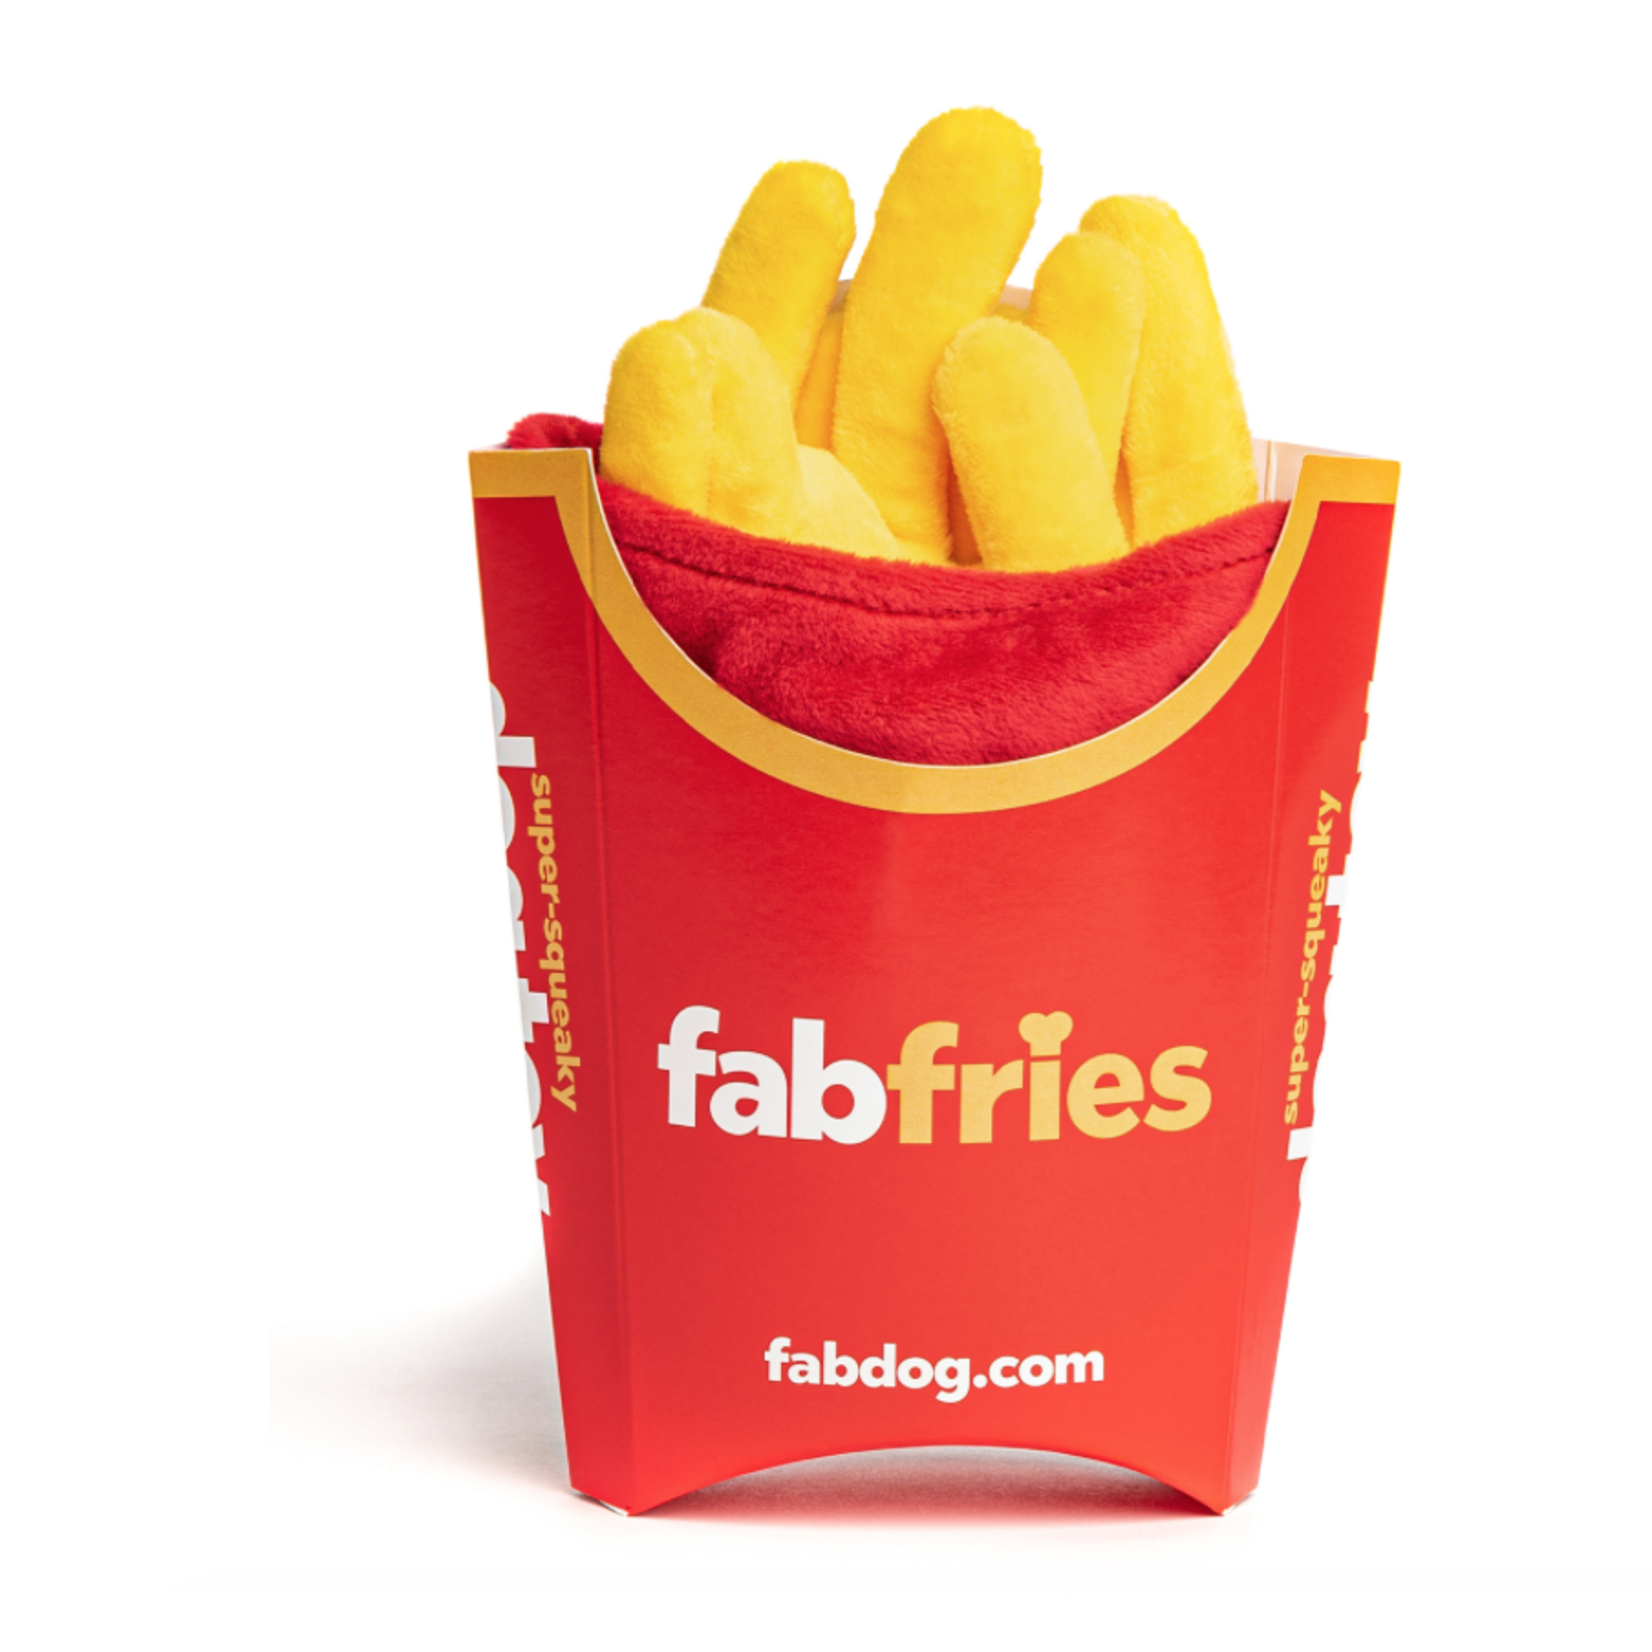 FABDOG Fabdog Foodies French Fries Super-squeaker Toy